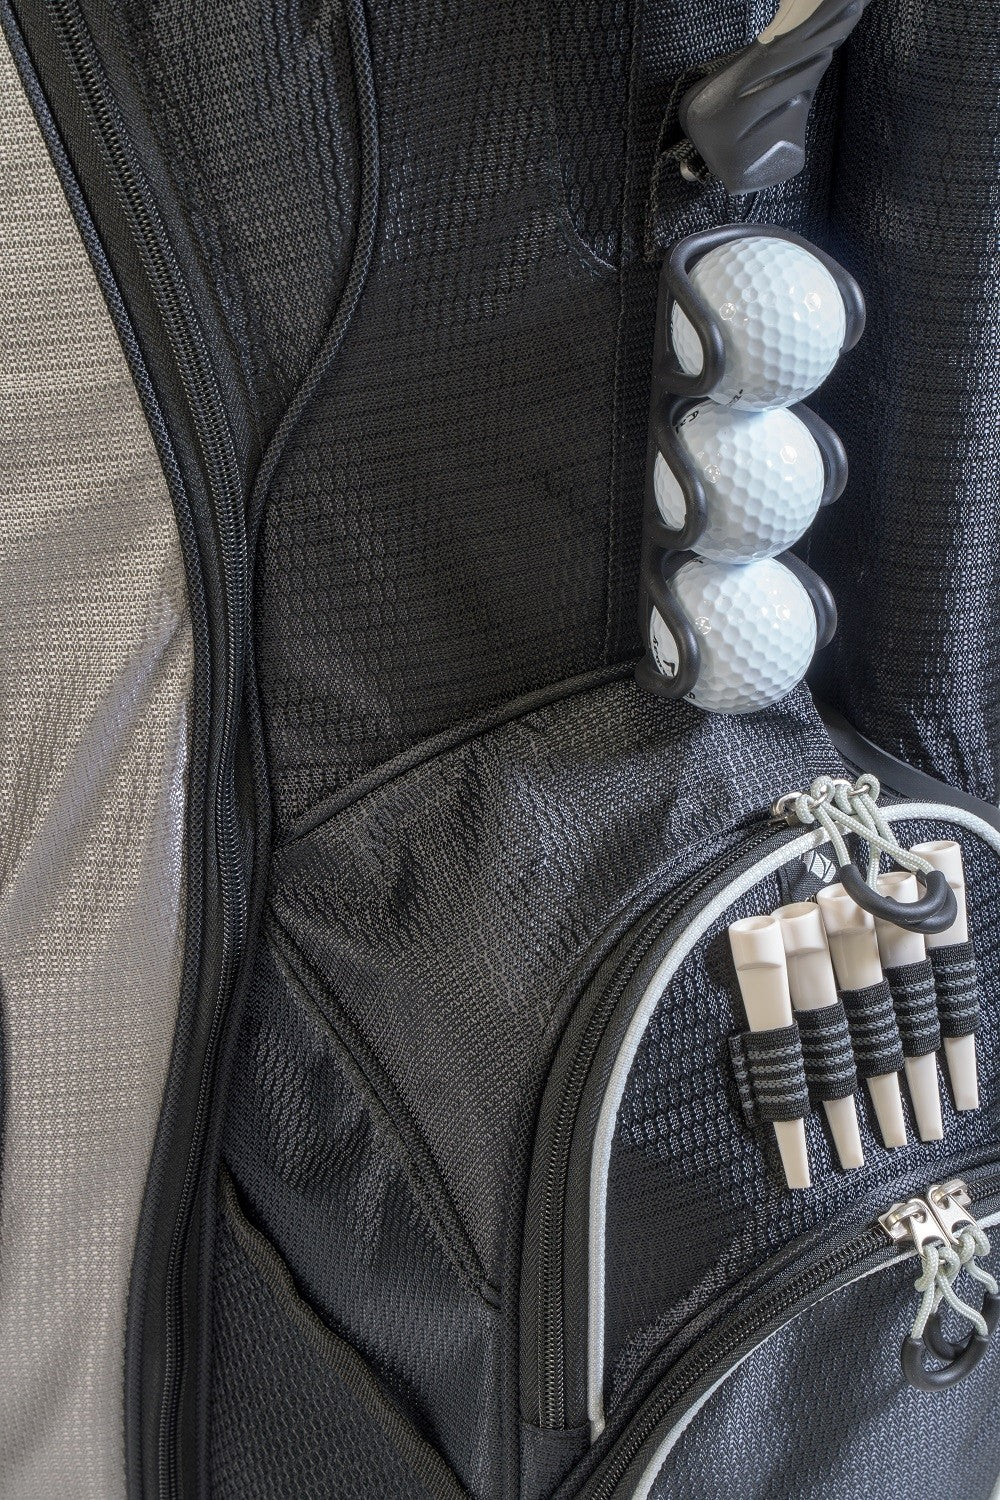 Axglo Golf Cart Bag - Grey/Black - golf ball